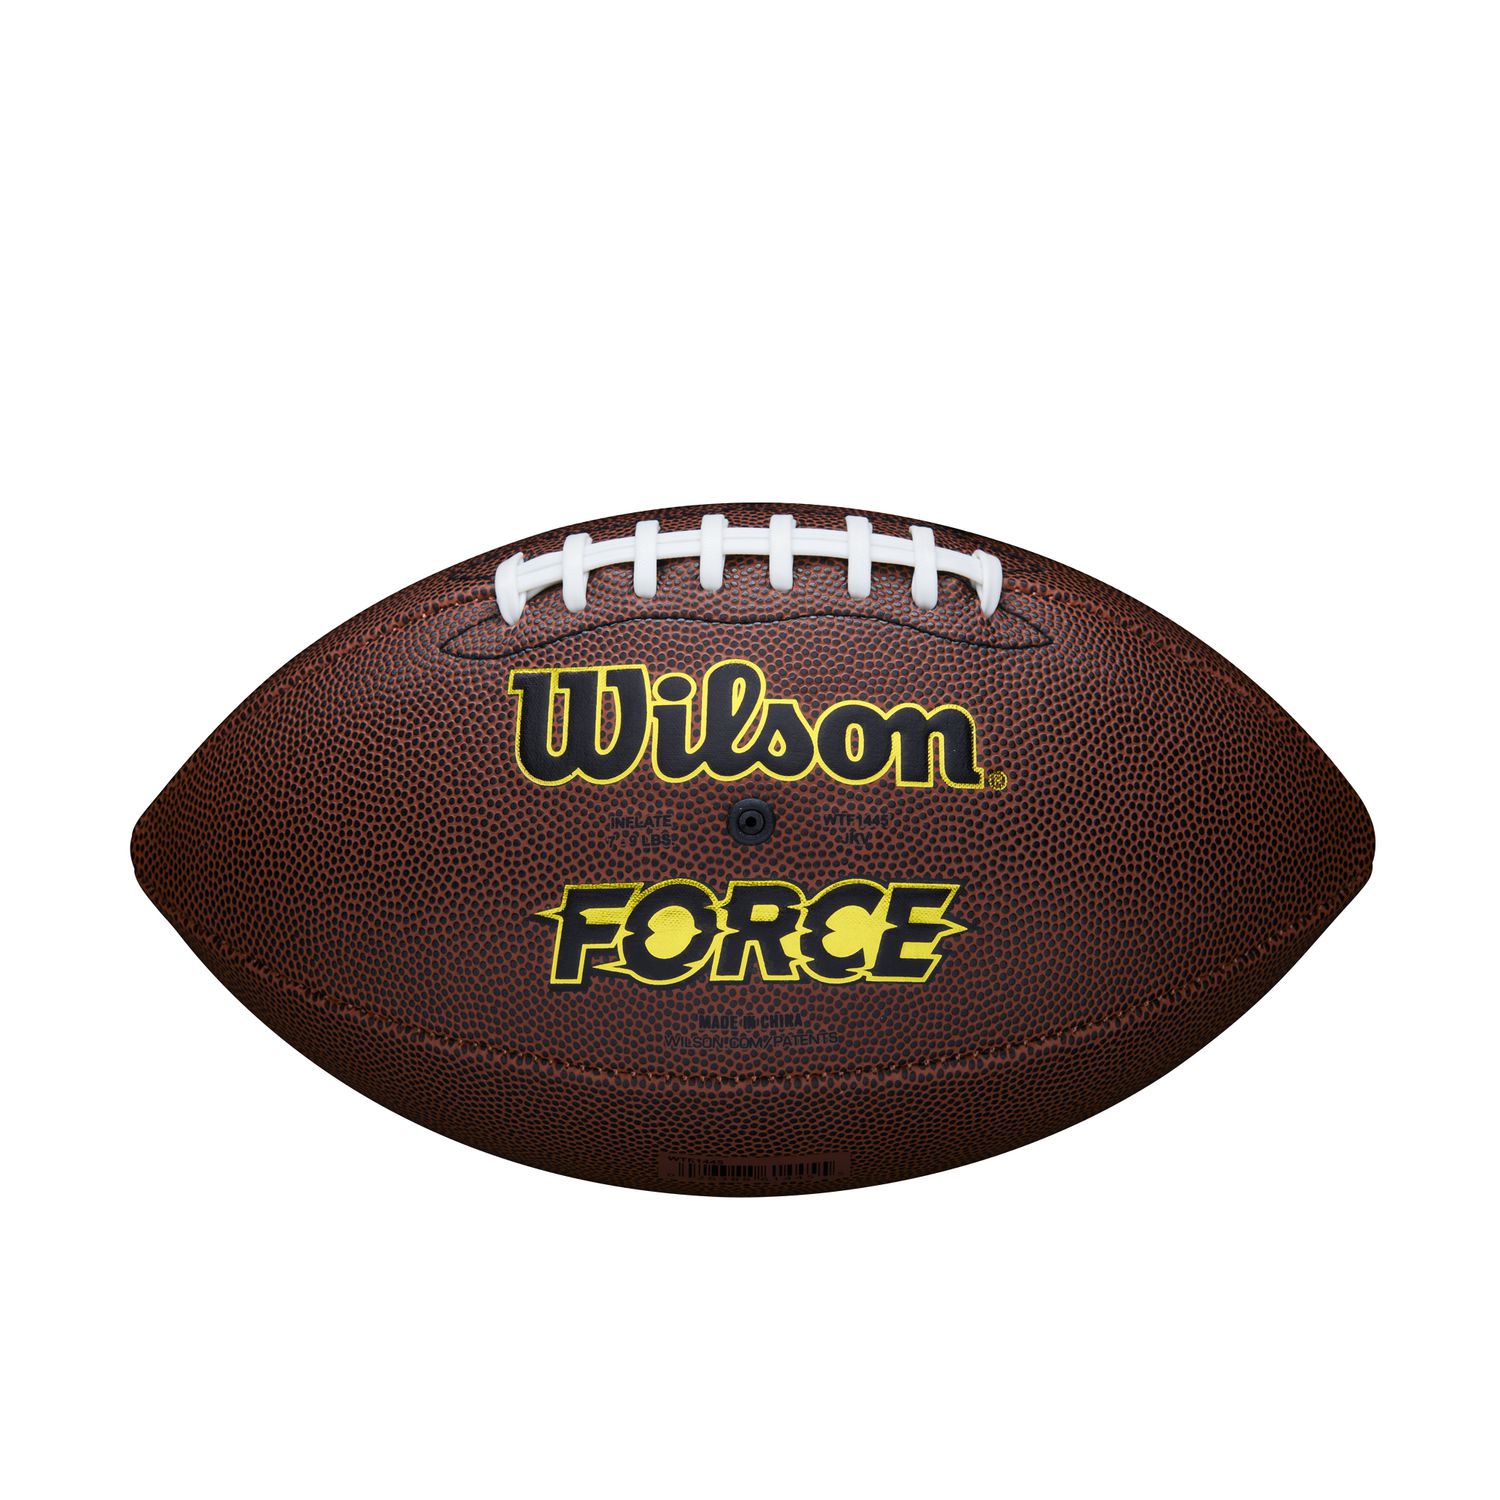 Ballon de football NFL Force de taille junior 